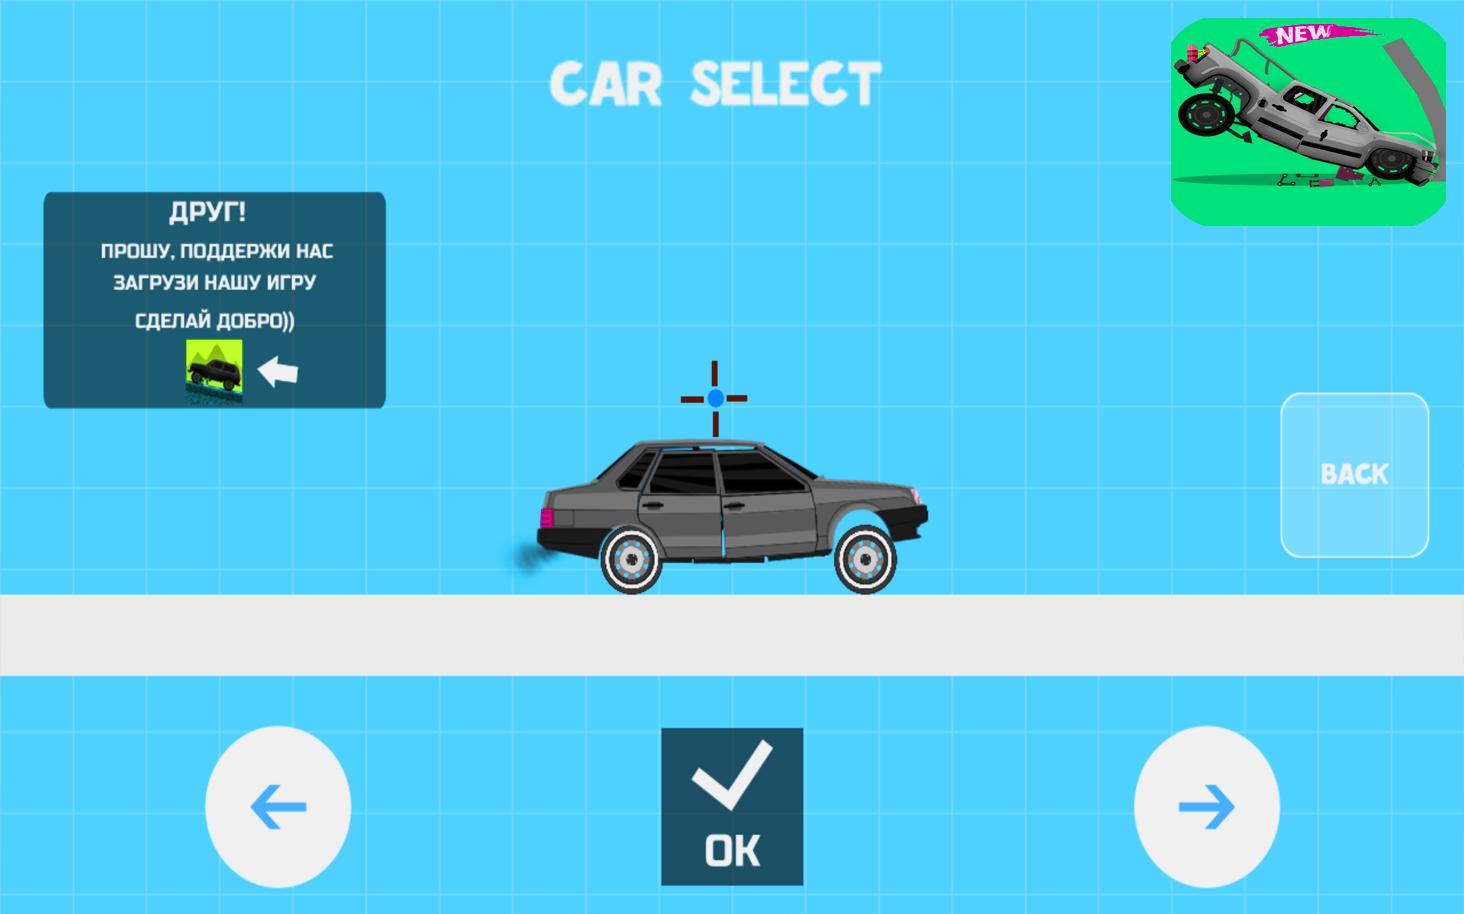 Simple Car Crash Physics Sim APK (Android Game) - Free Download